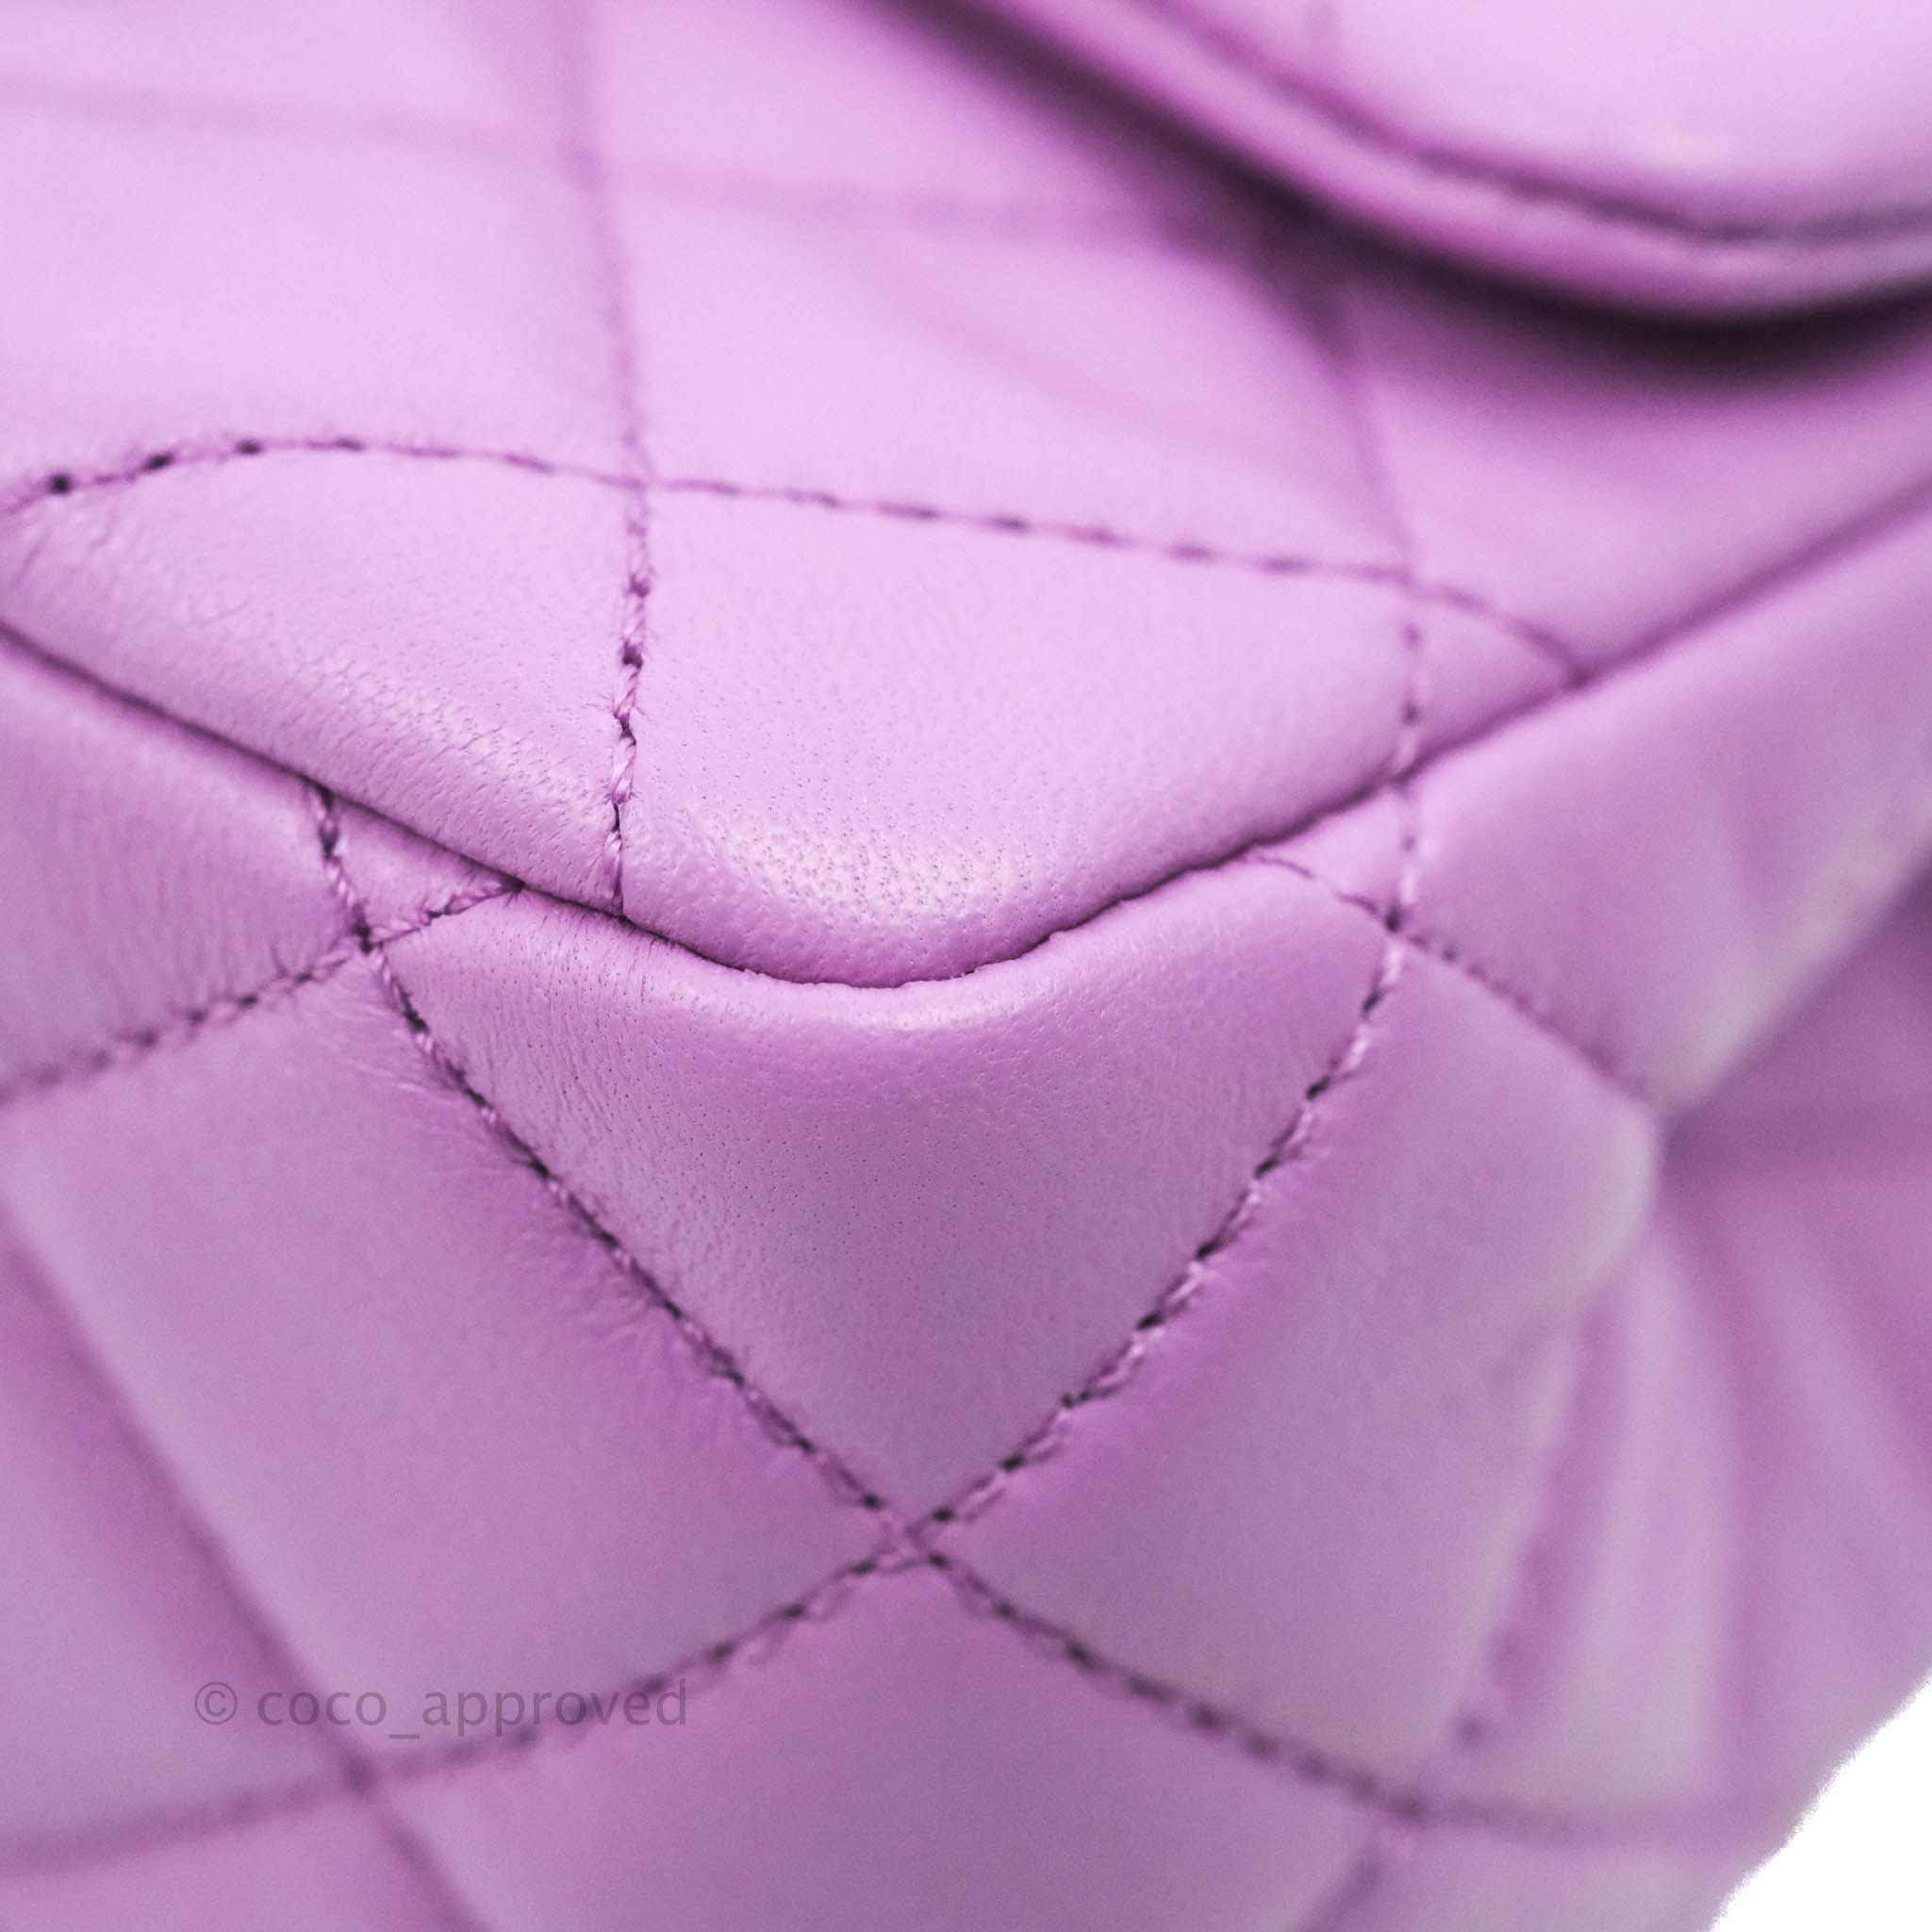 Chanel 21B Mini Square Pearl Crush Flap Bag in light purple